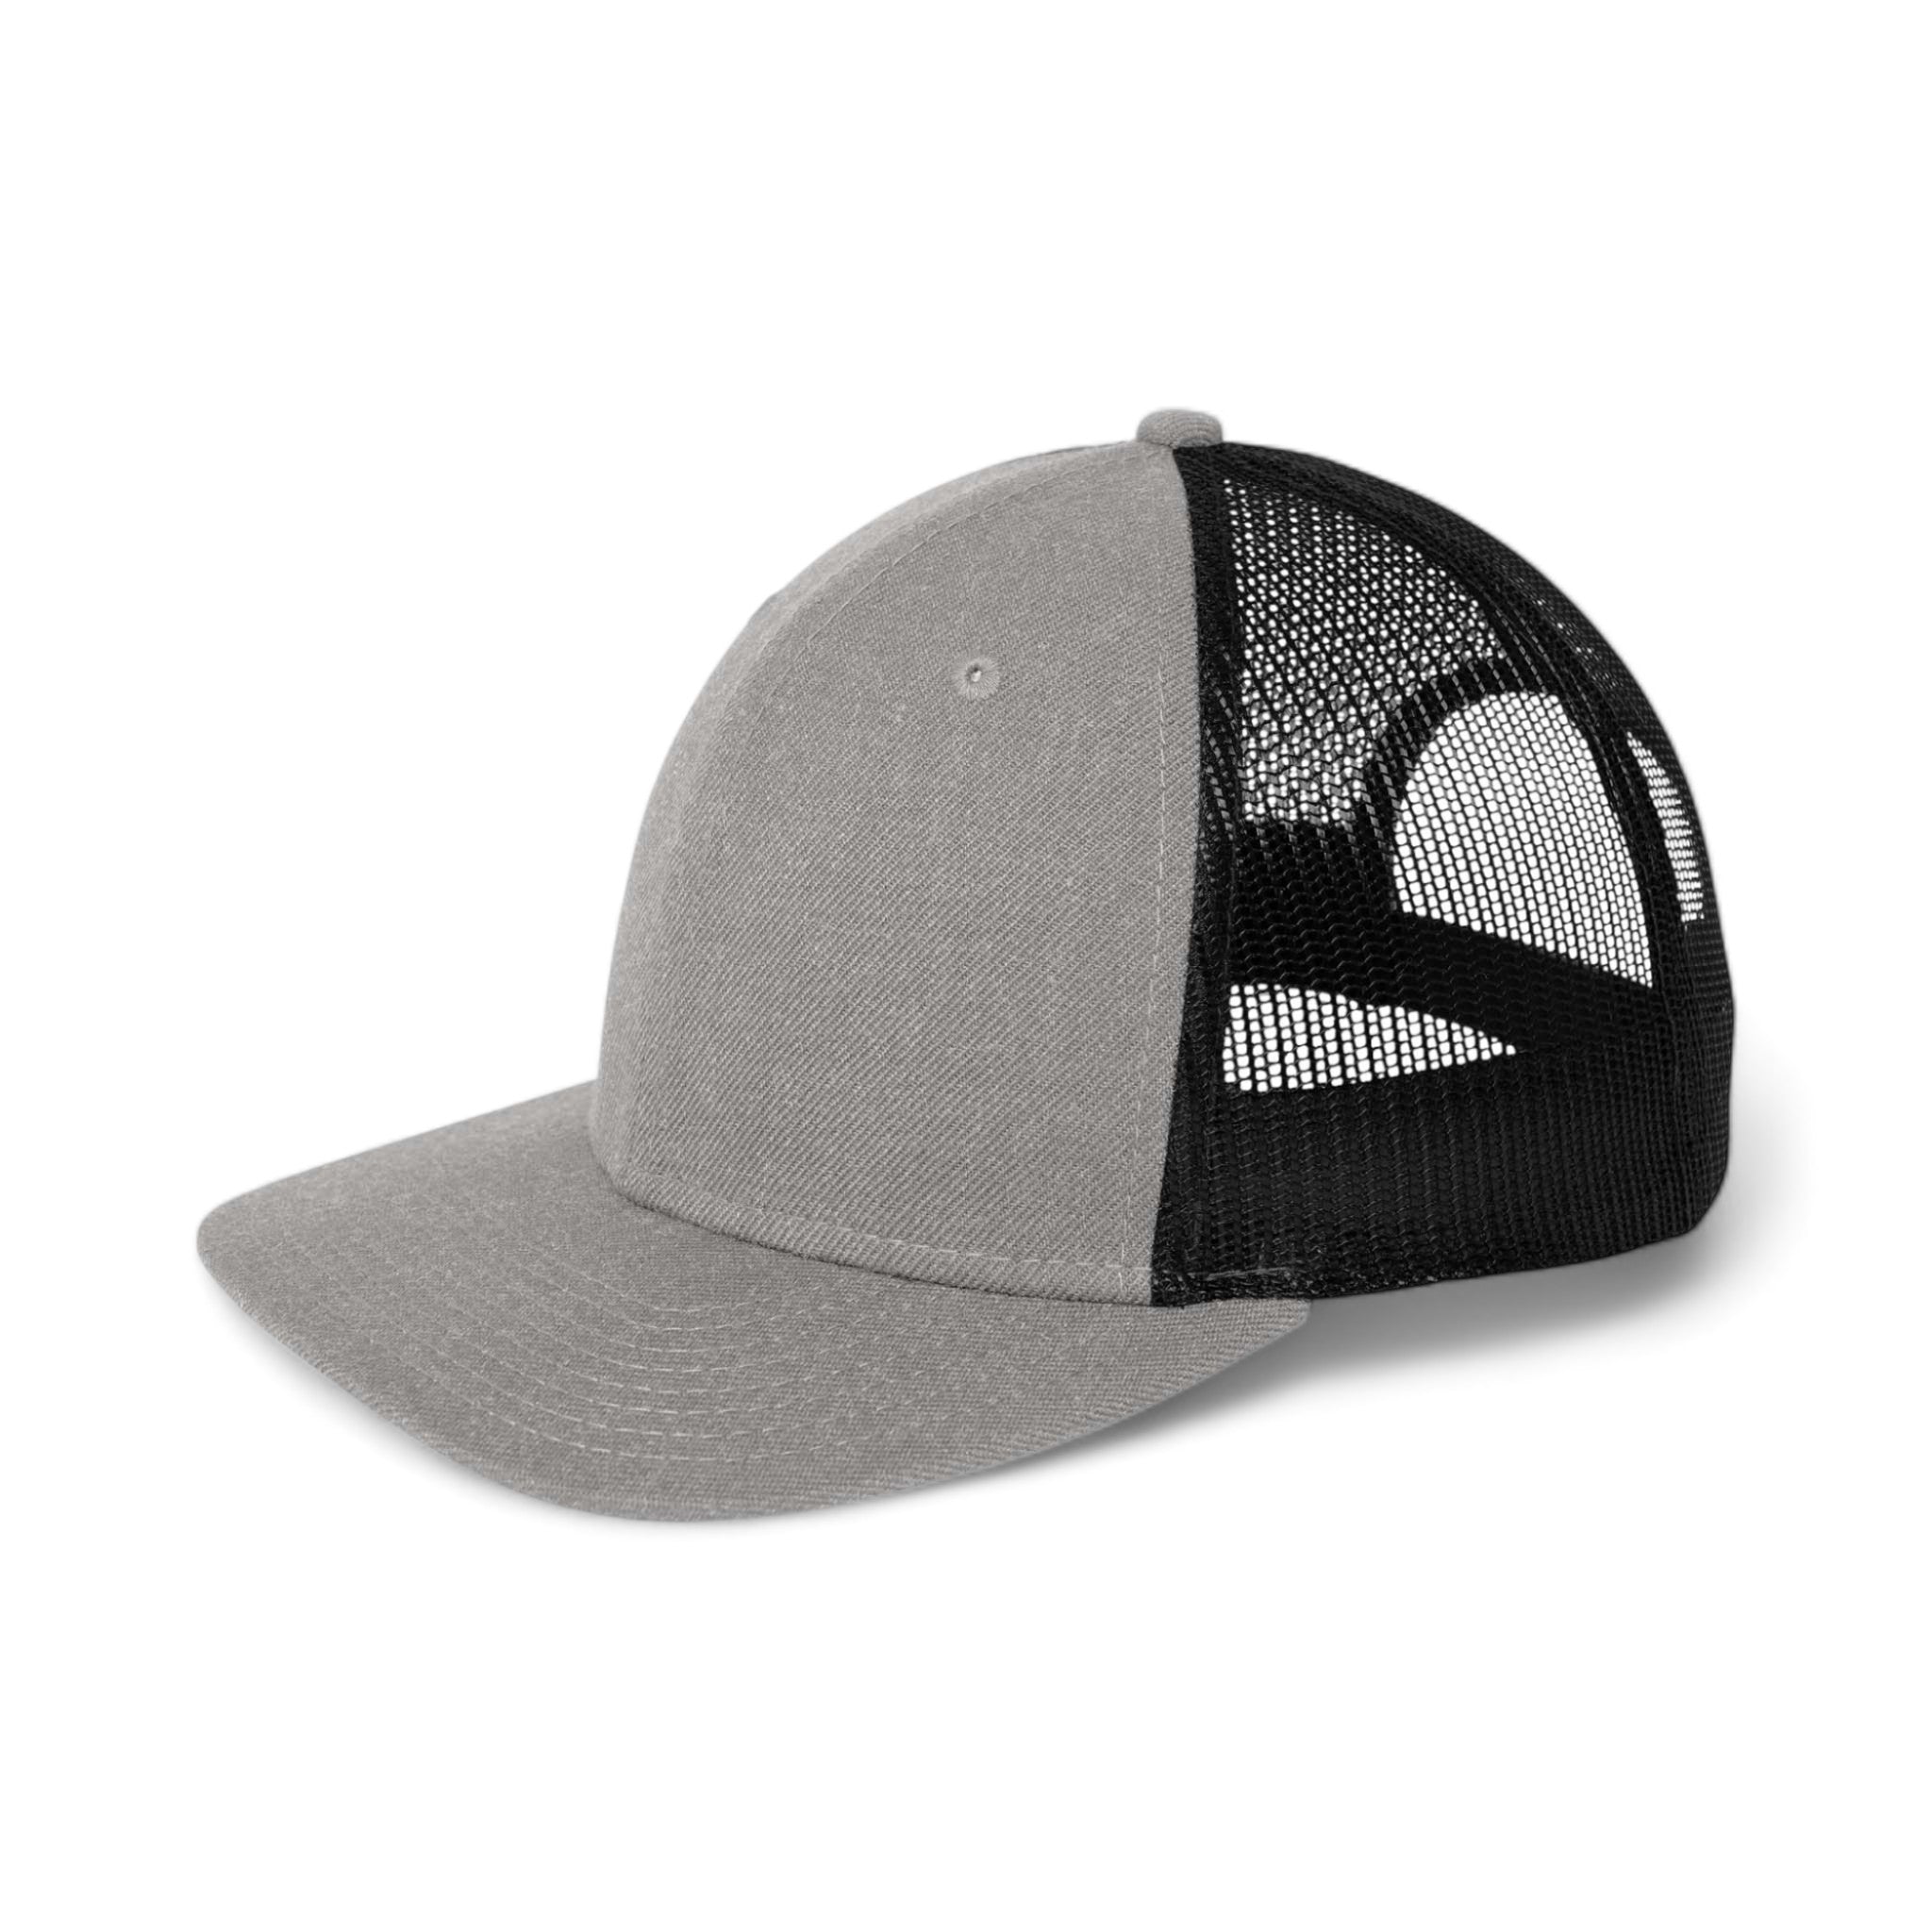 Side view of New Era NE207 custom hat in heather grey and black